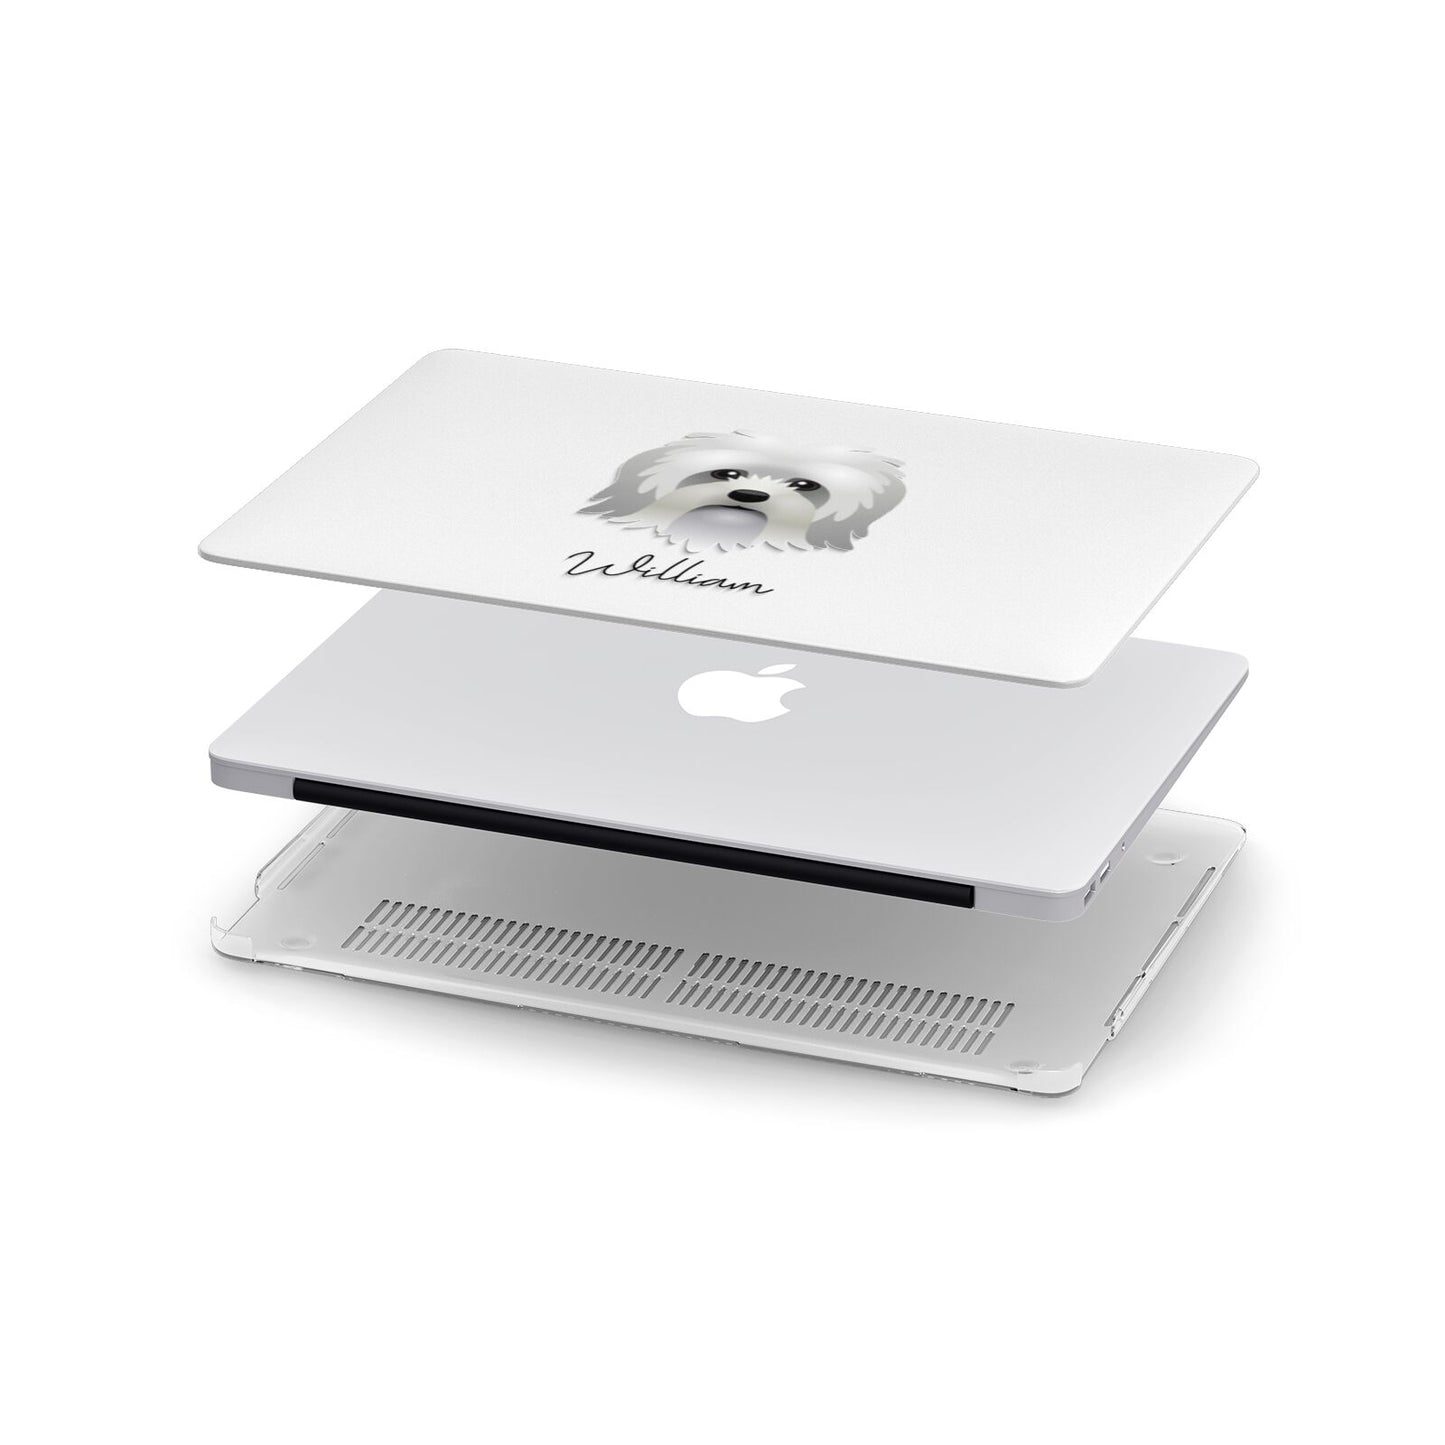 Lo wchen Personalised Apple MacBook Case in Detail